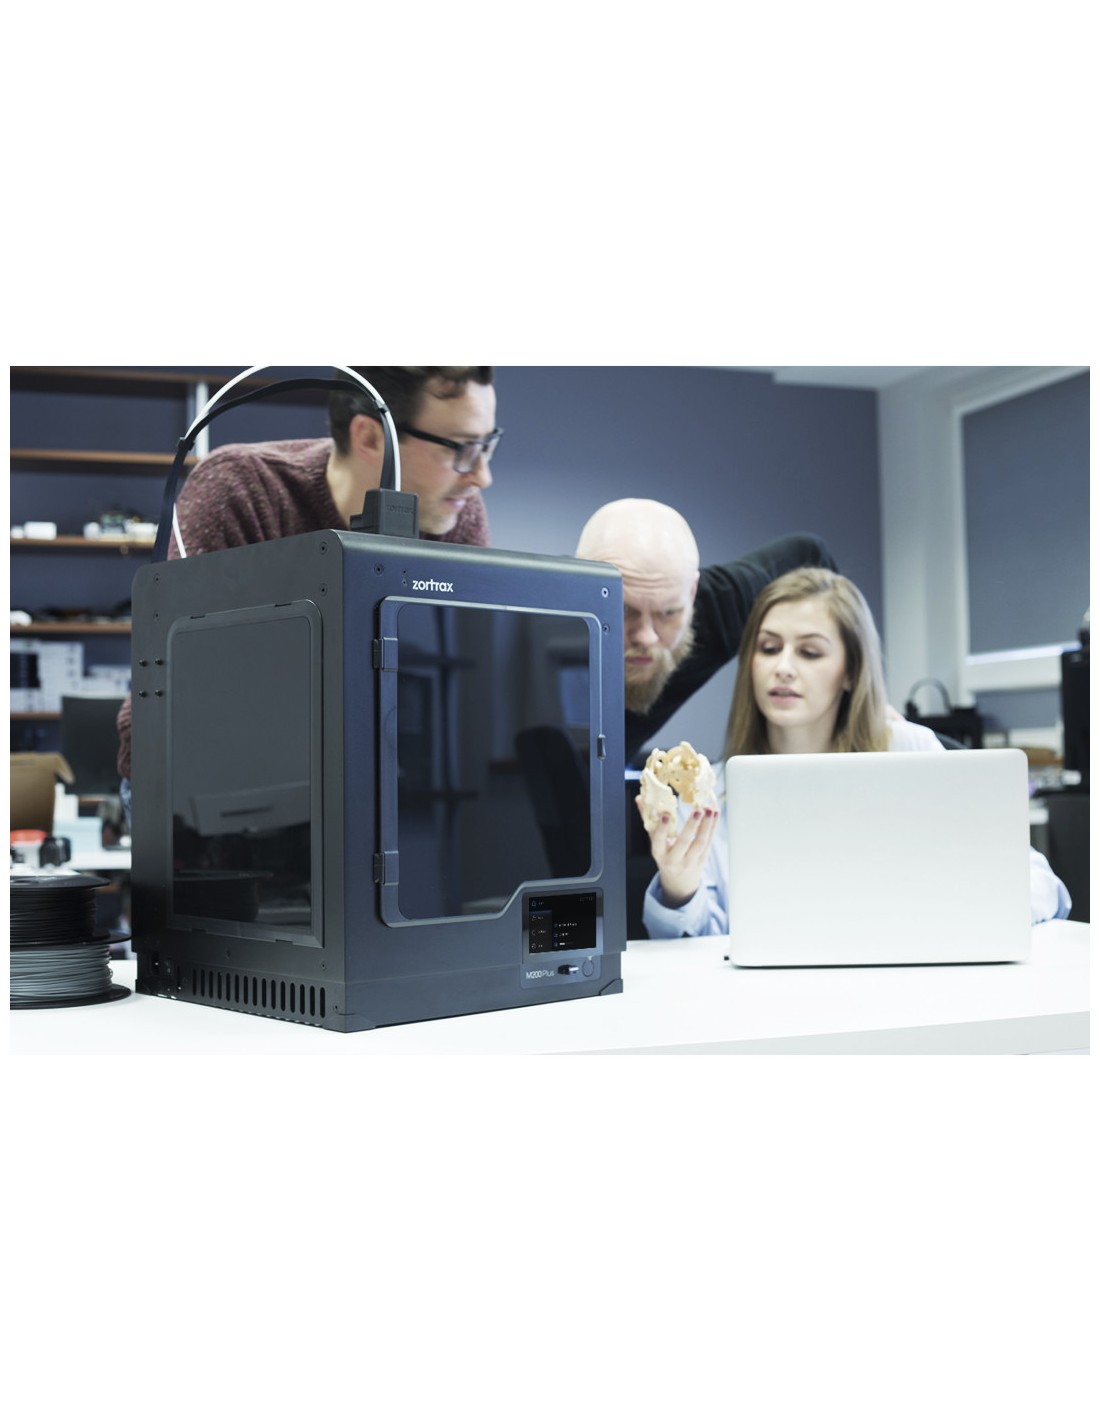 Zortrax M200 Plus - 3D printer